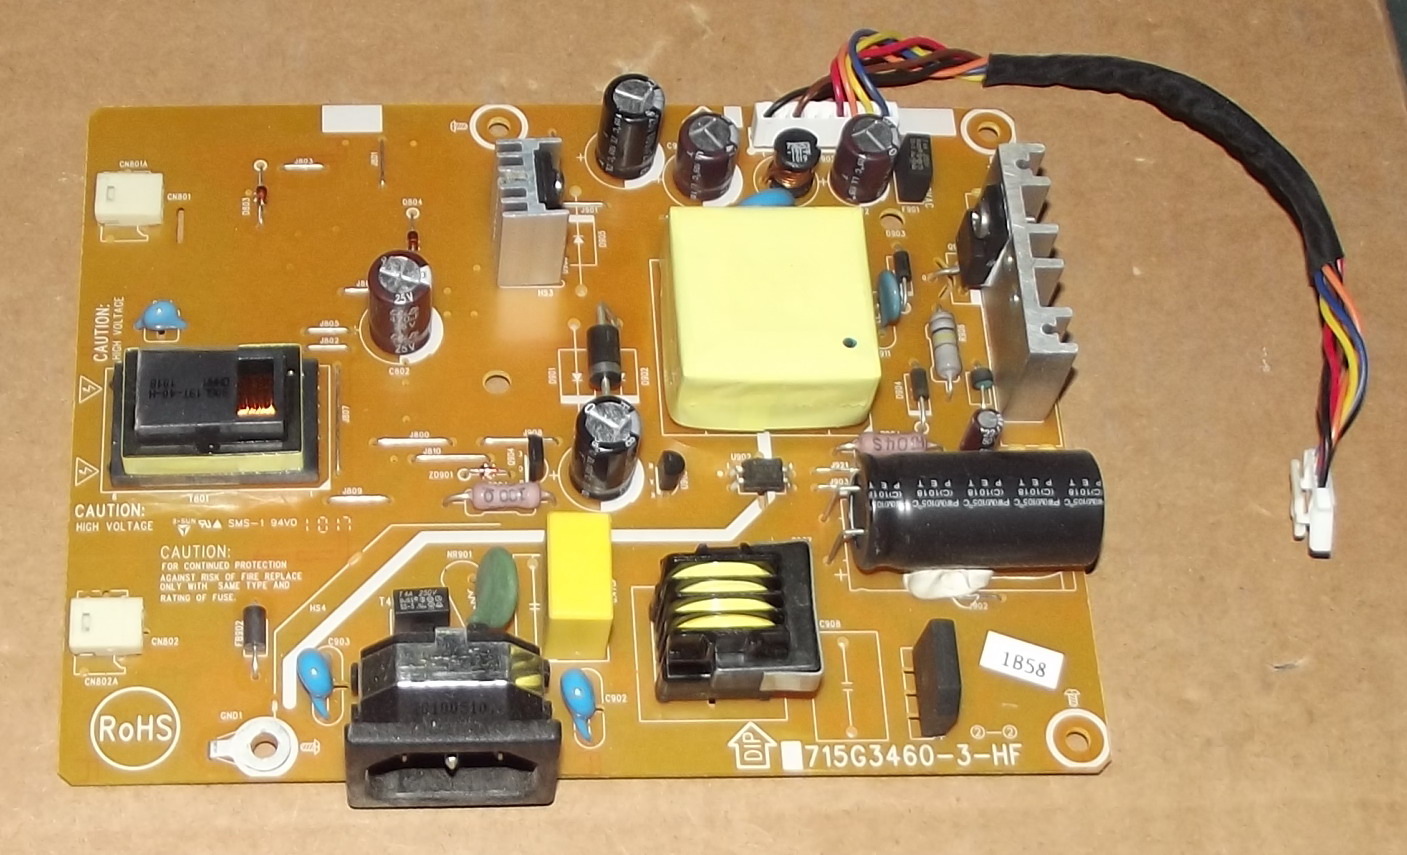 715G3460-3-HF LCD power inverter board